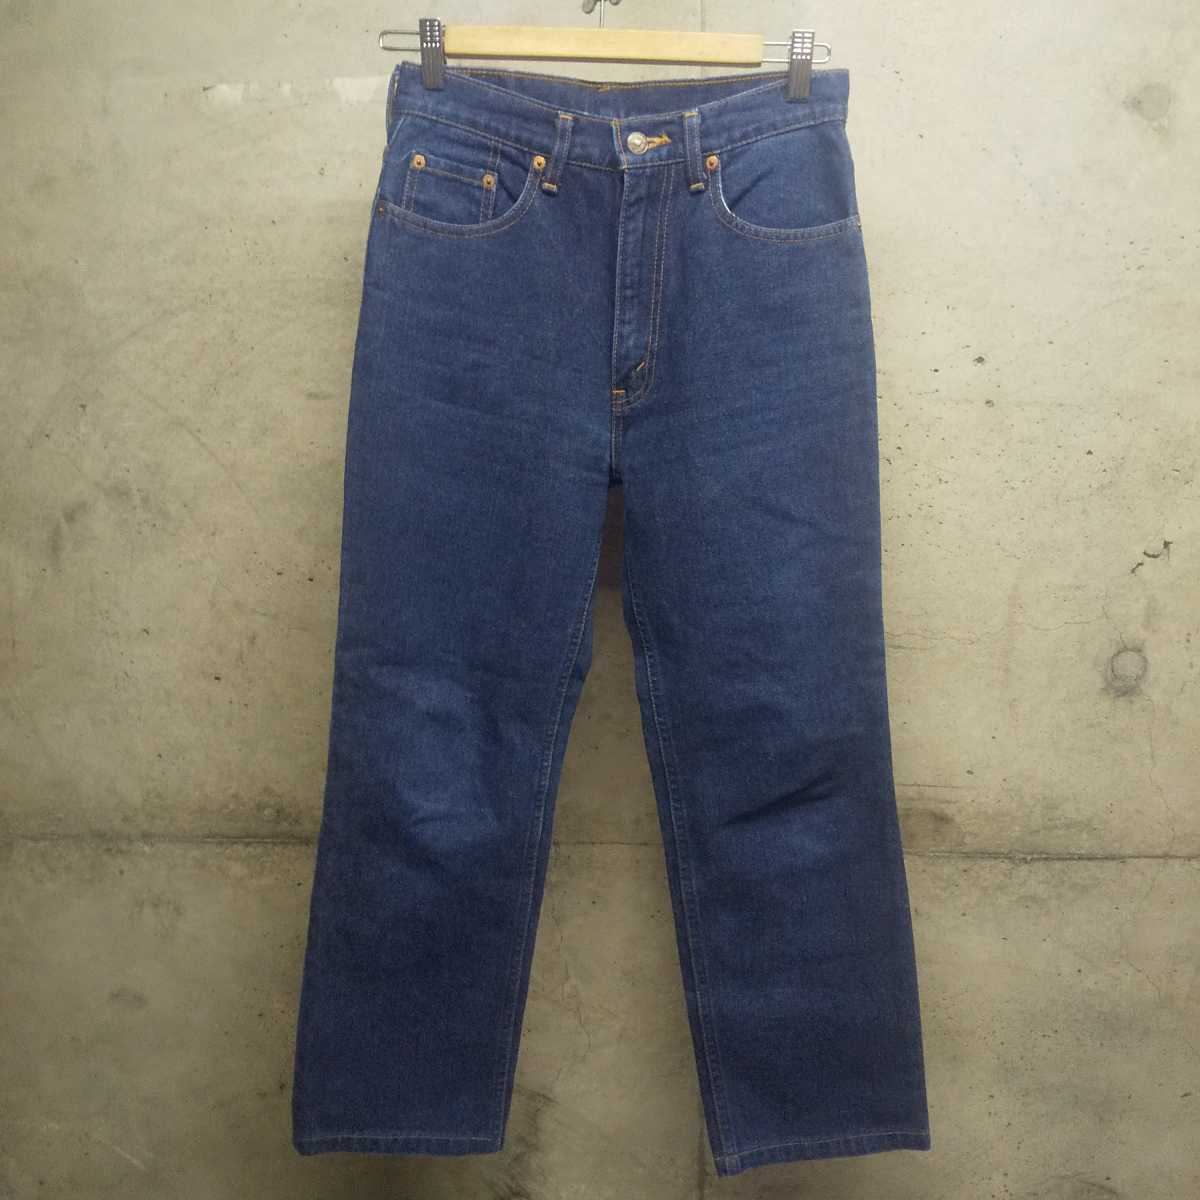 90s Levis / リーバイス W508 ハイウエスト ストレートデニム Levi's デニム パンツ jeans denime Gパン ジーンズ ジーパン 古着 used